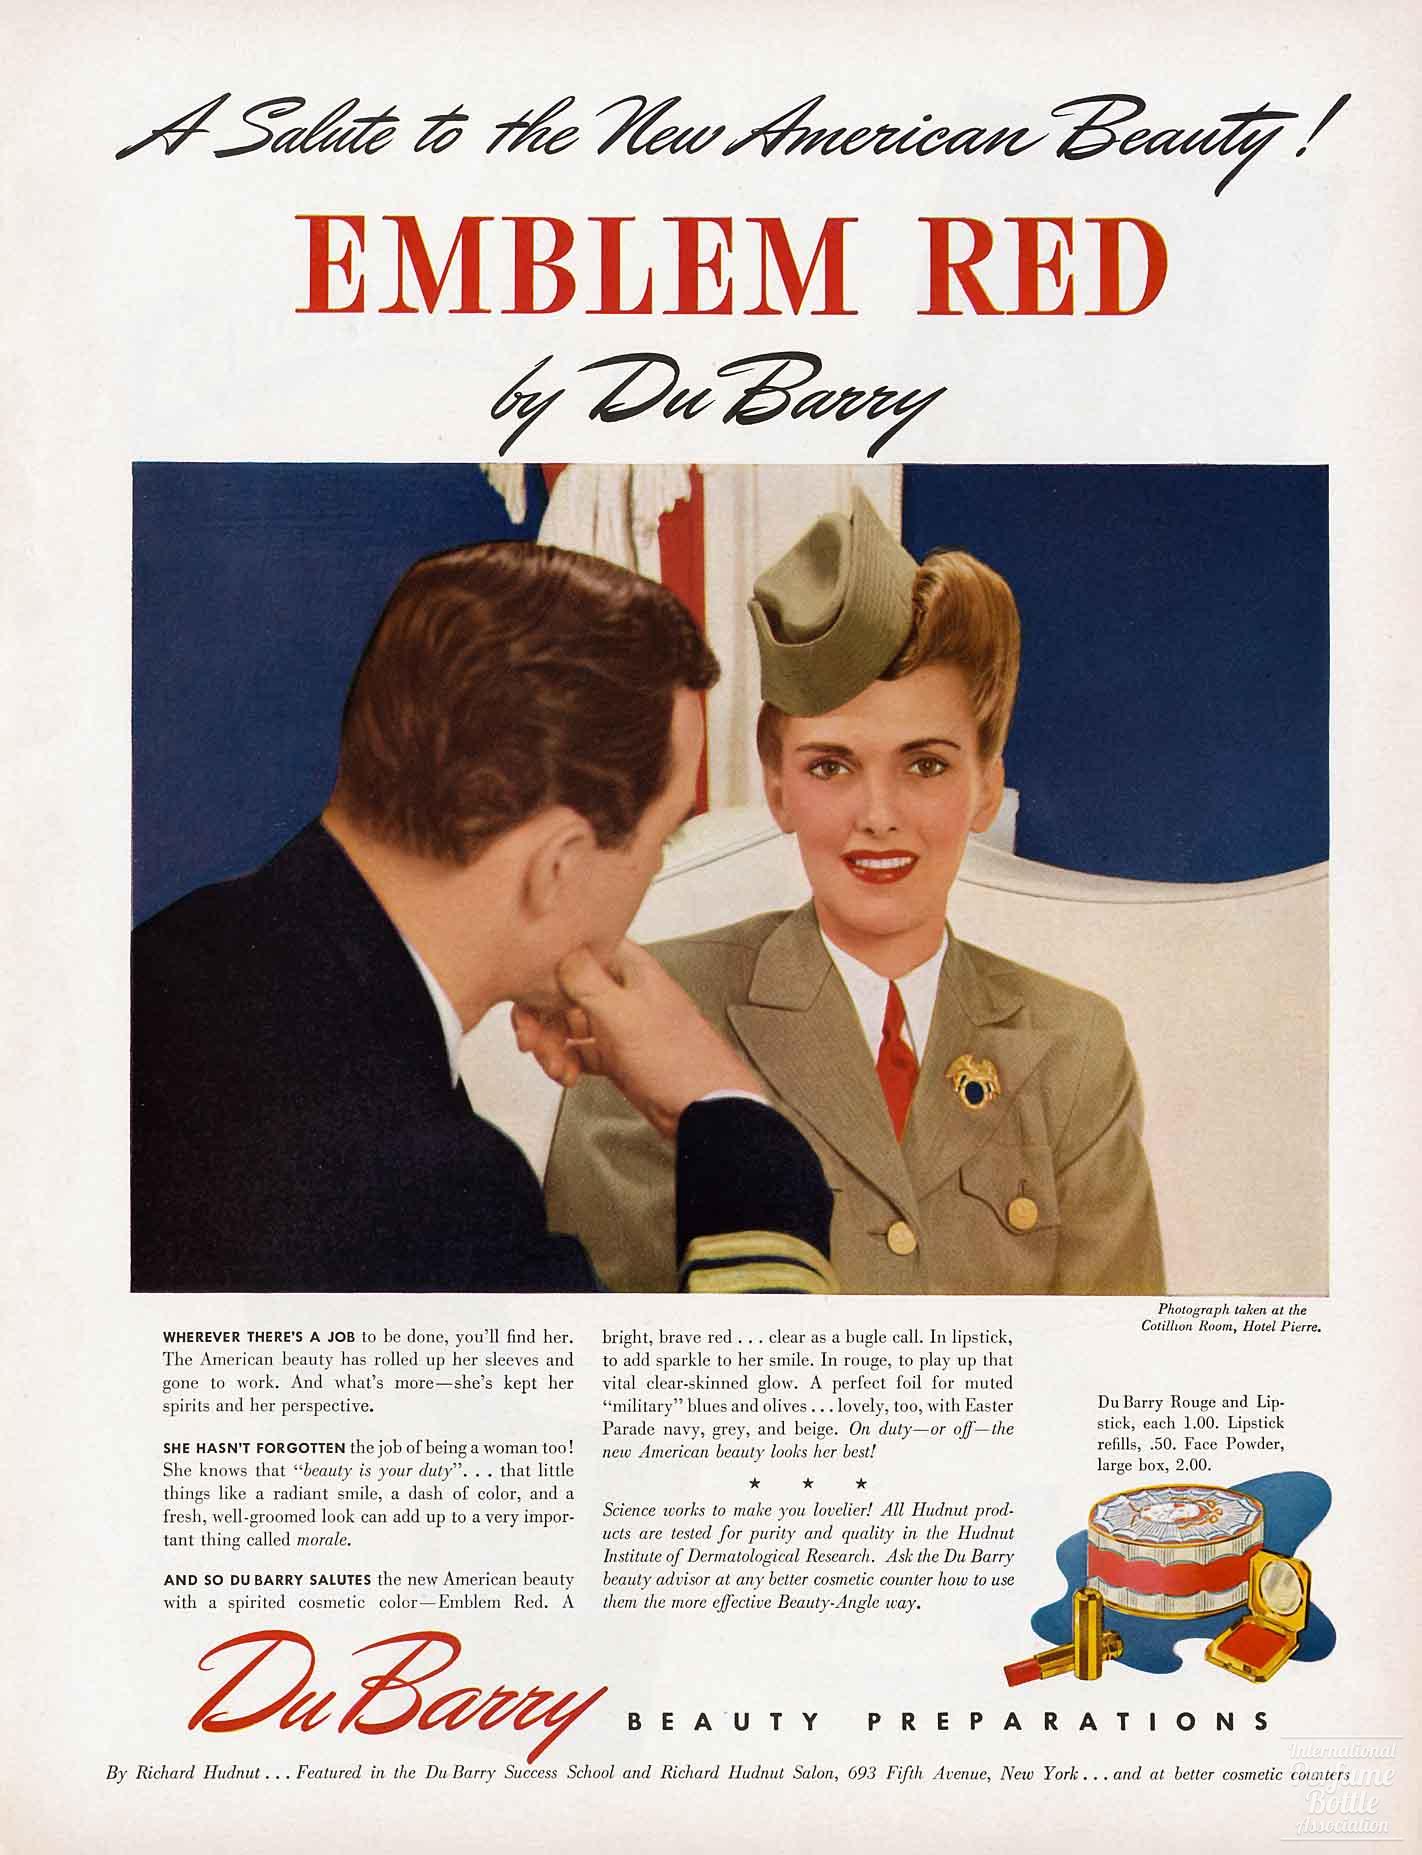 "Emblem Red" DuBarry Beauty Preparations Advertisement by Richard Hudnut - 1942